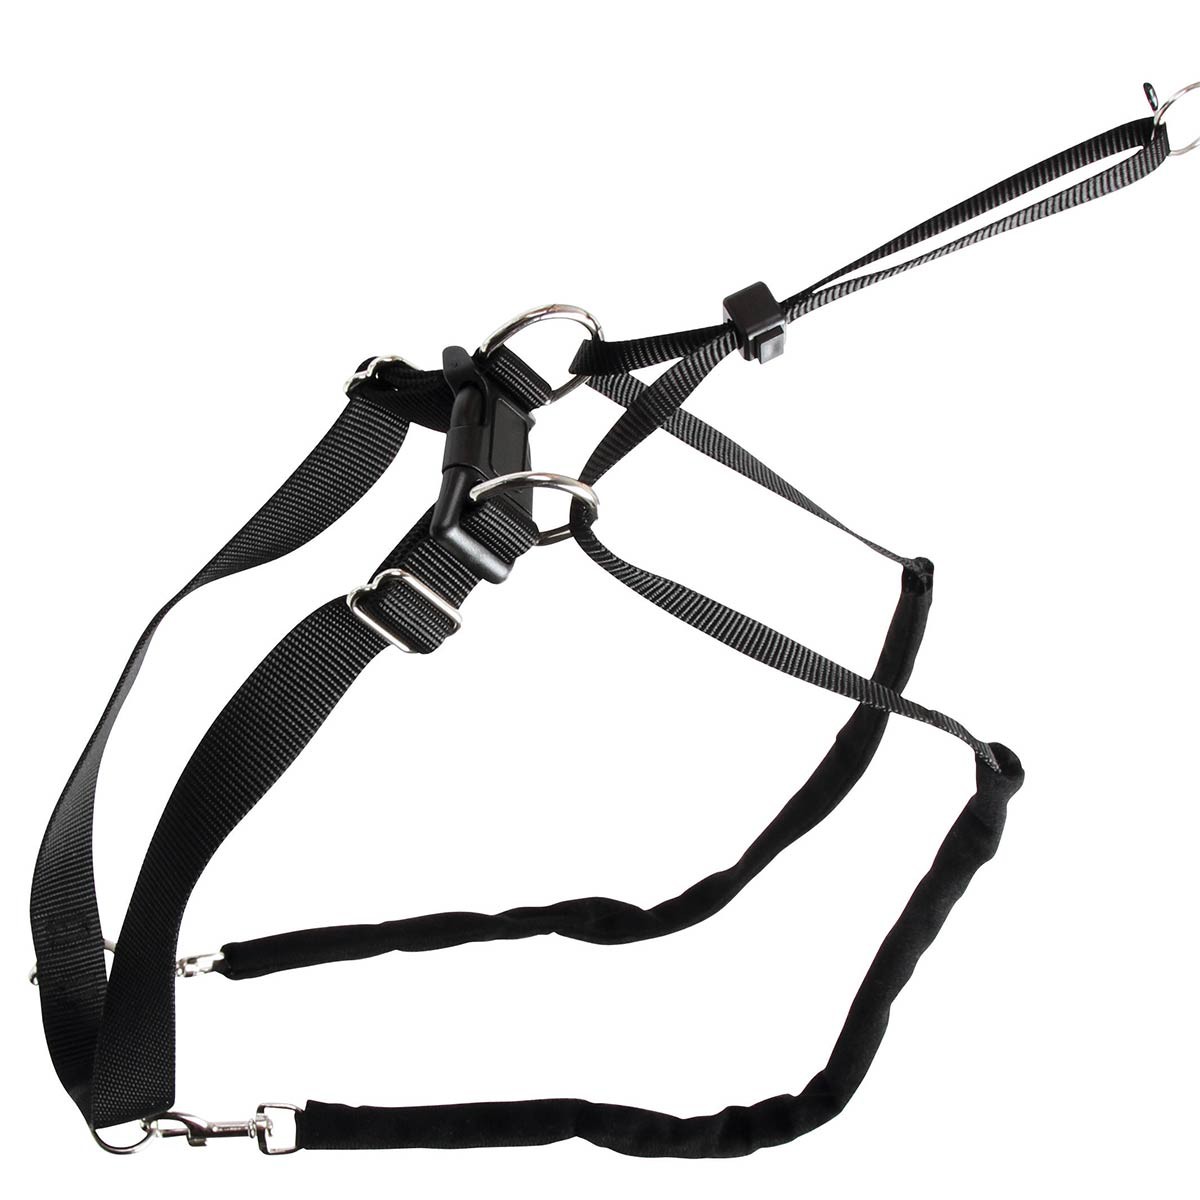 MAXI LEADER training harness set, size 1, black 1